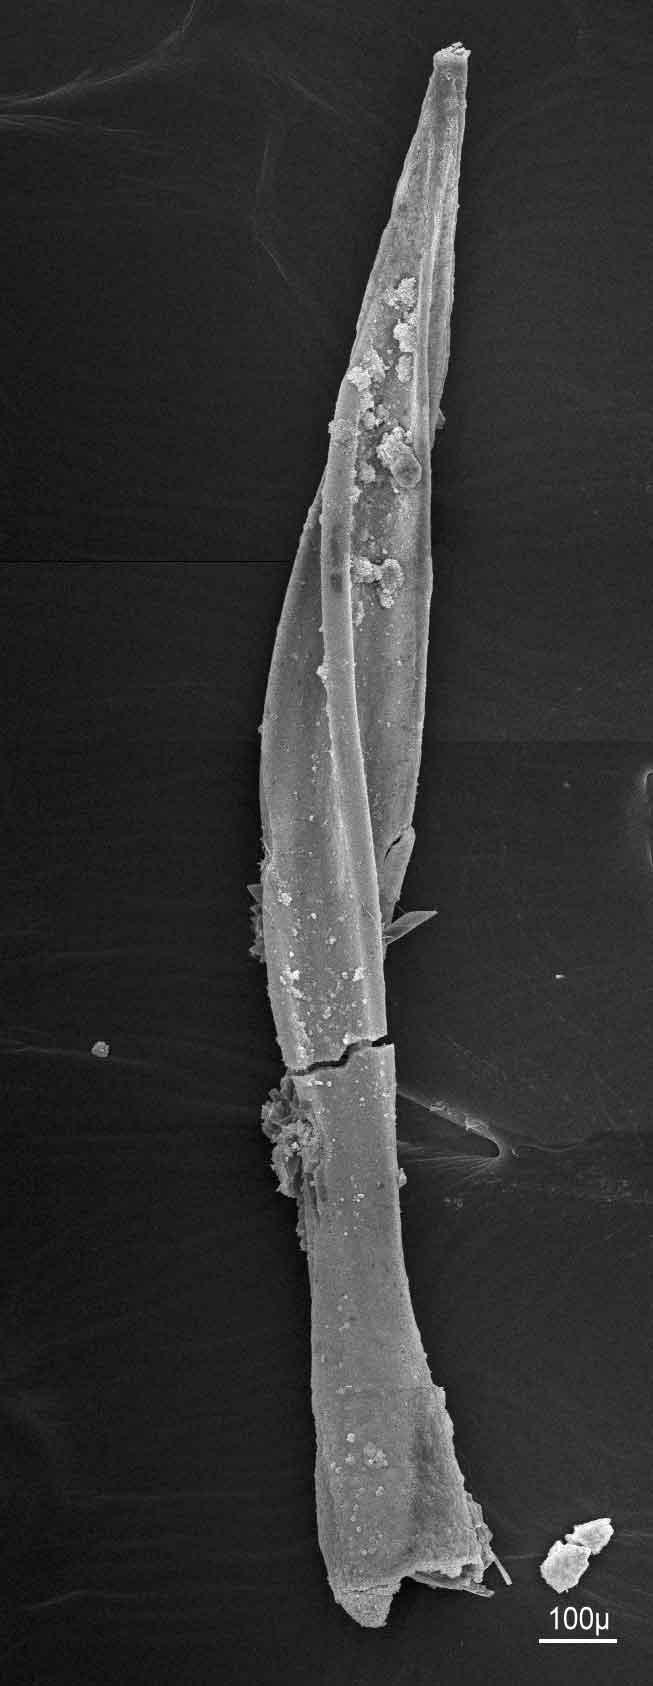 320 X. CUCHERAT & S. DEMUYNCK Figure 2 Pseudotrichia rubiginosa dart from Nieppe, River Lys (scale bar 100 µm).